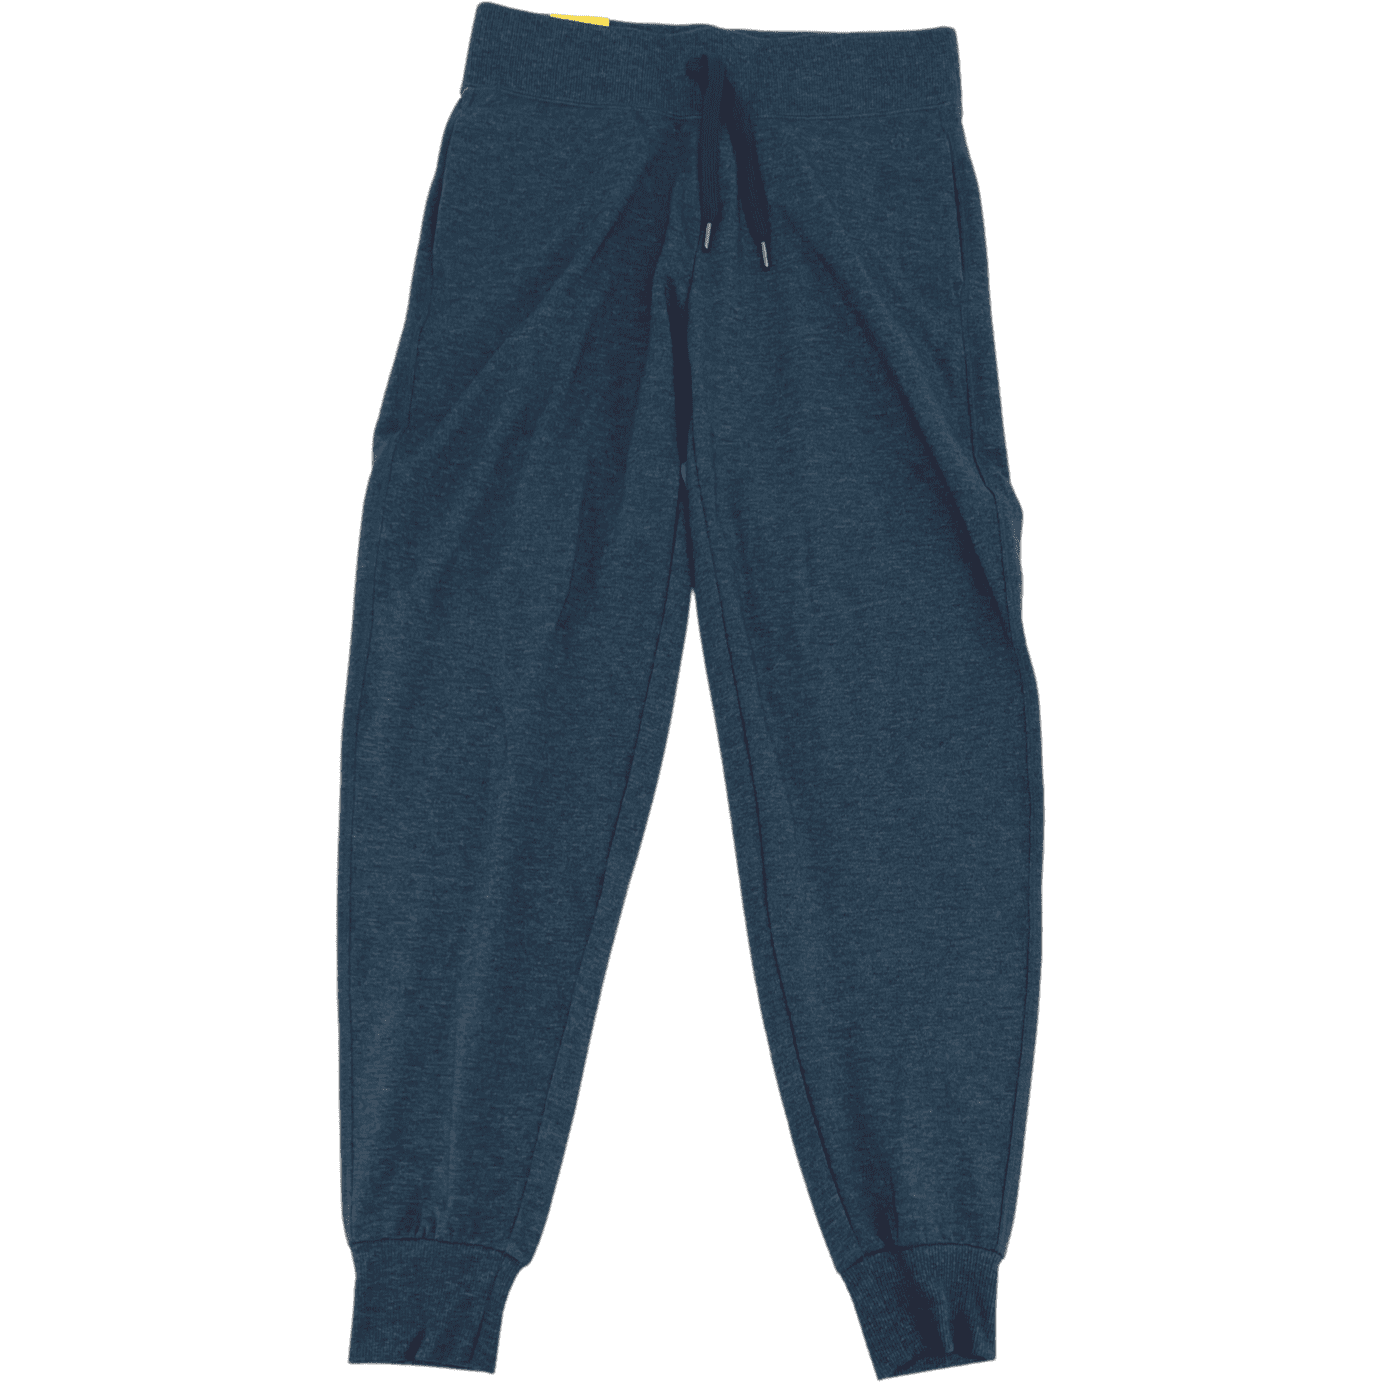 Tuff Athletics Women’s Blue Sweatpants / Size Small